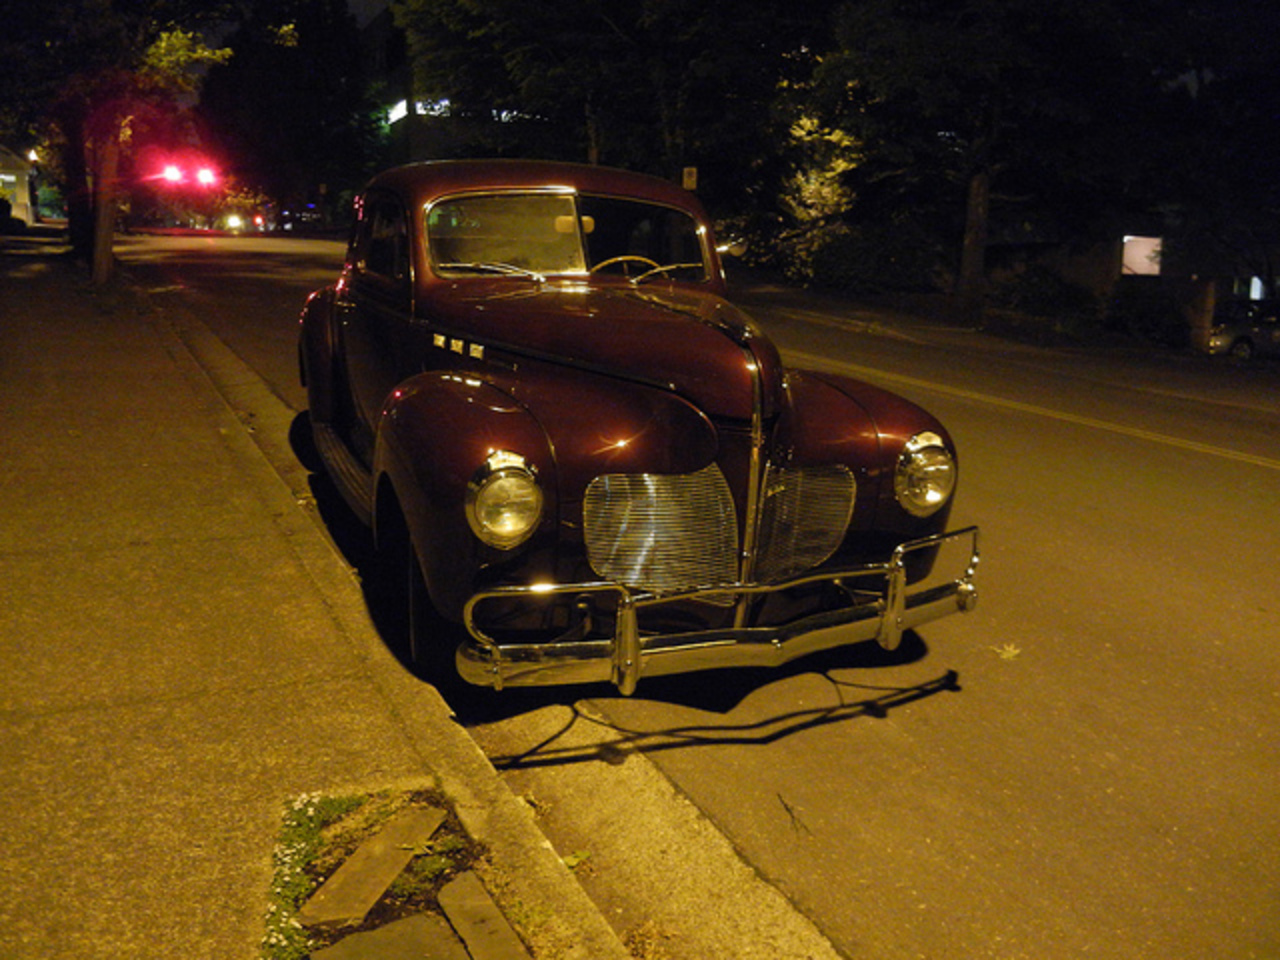 1940 De Soto CoupÃ© at night | Flickr - Photo Sharing!